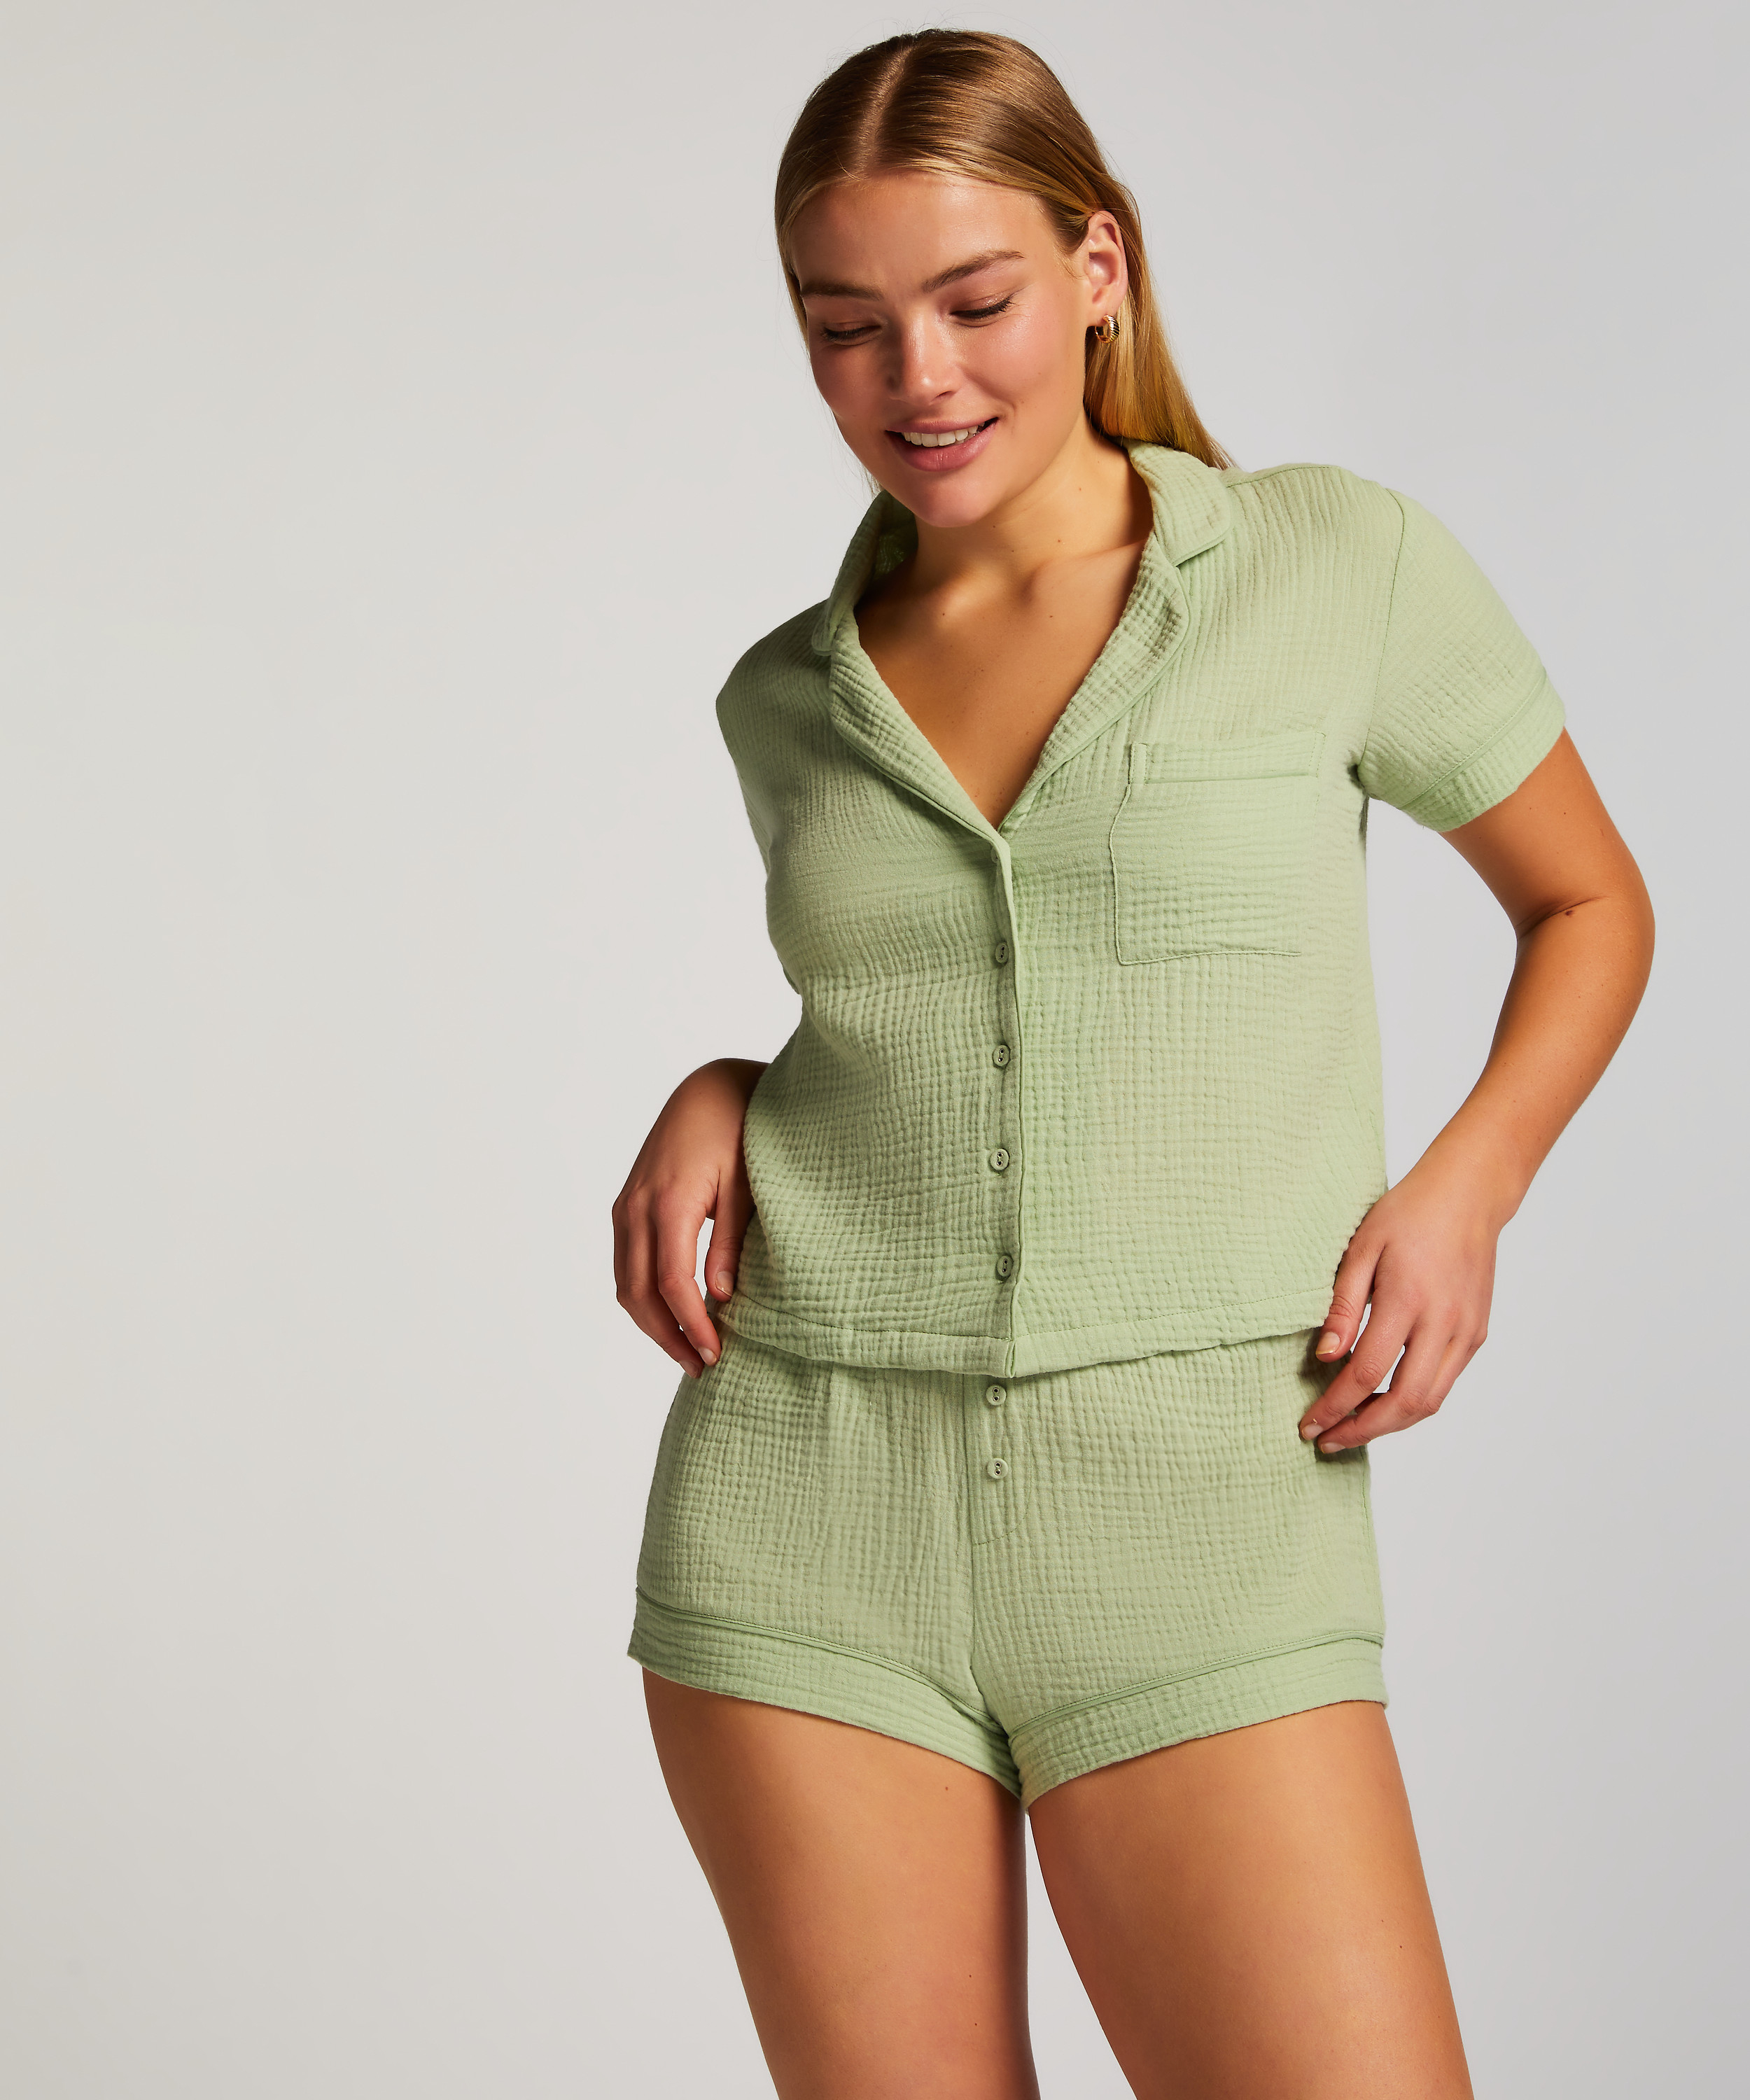 Pyjamatop Springbreakers, grün, main